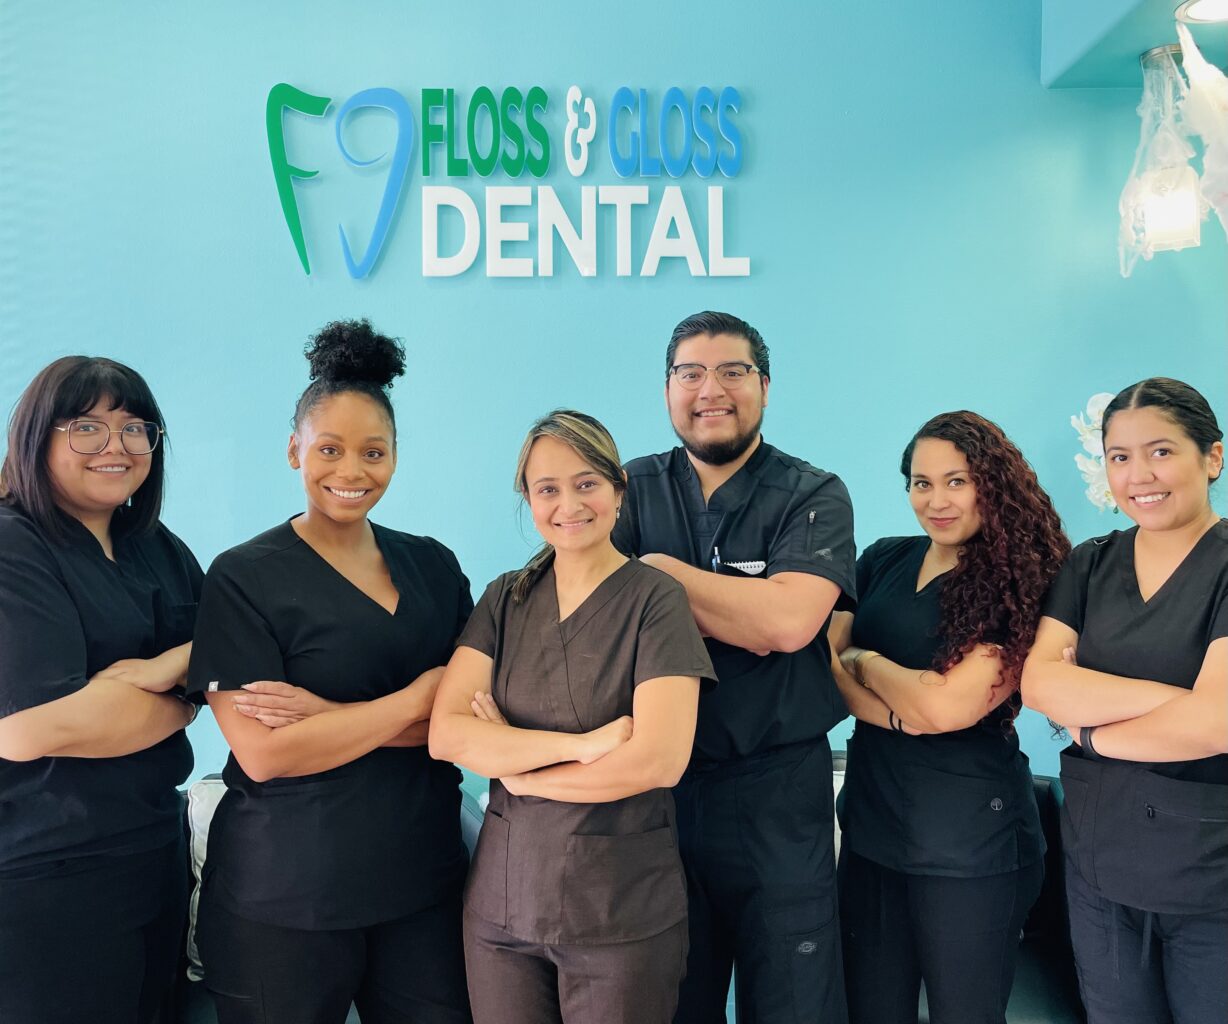 Bedford Dental Clinic